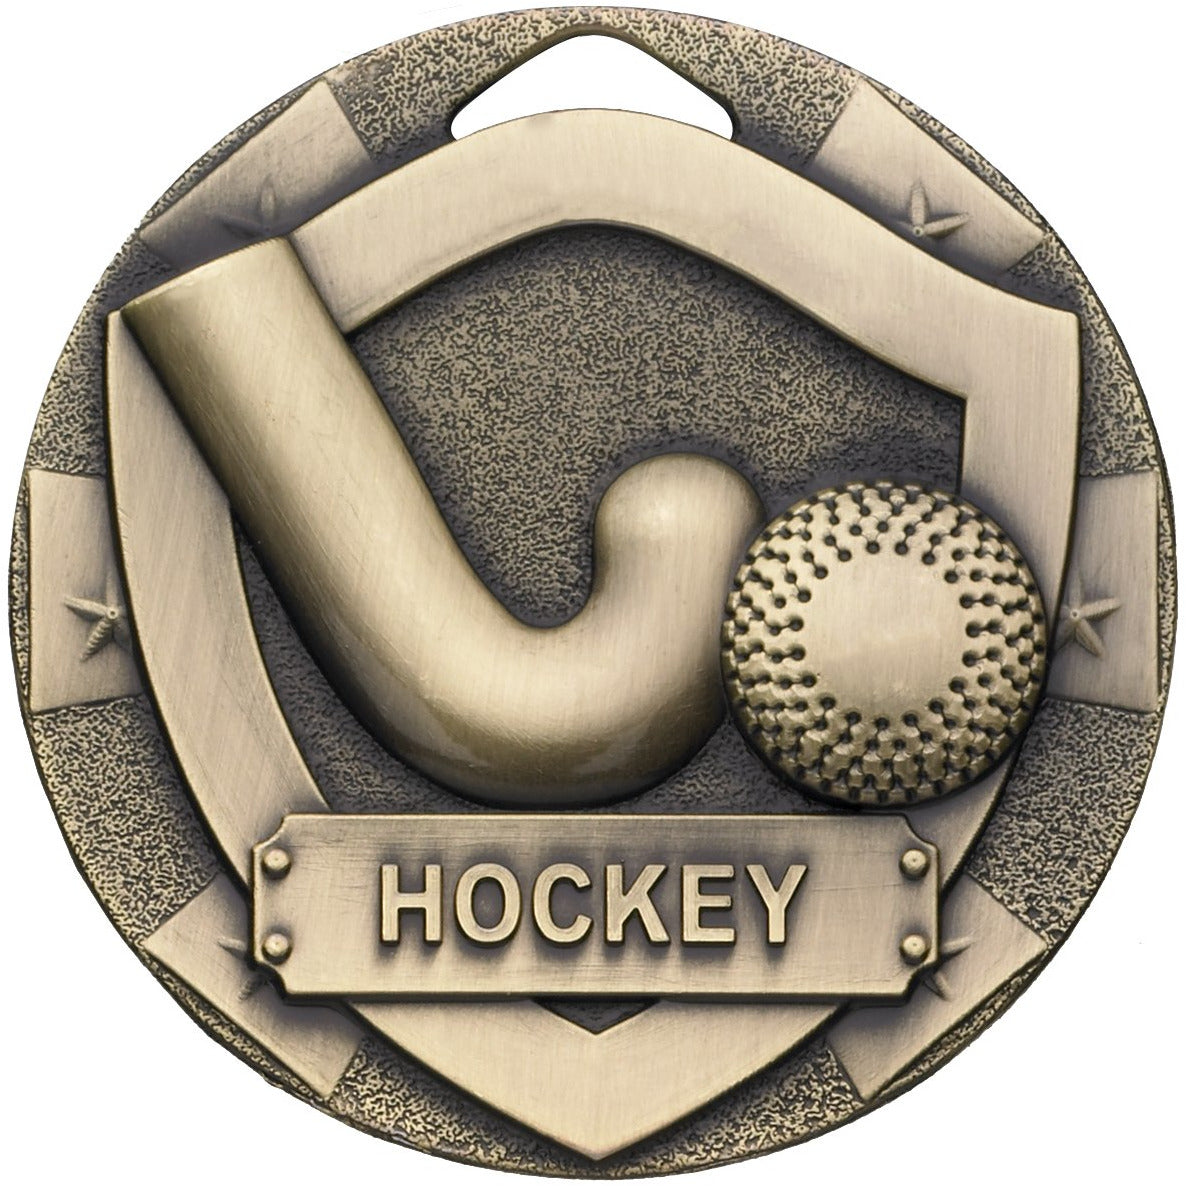 Hockey Mini Shield Medal 50mm Bronze